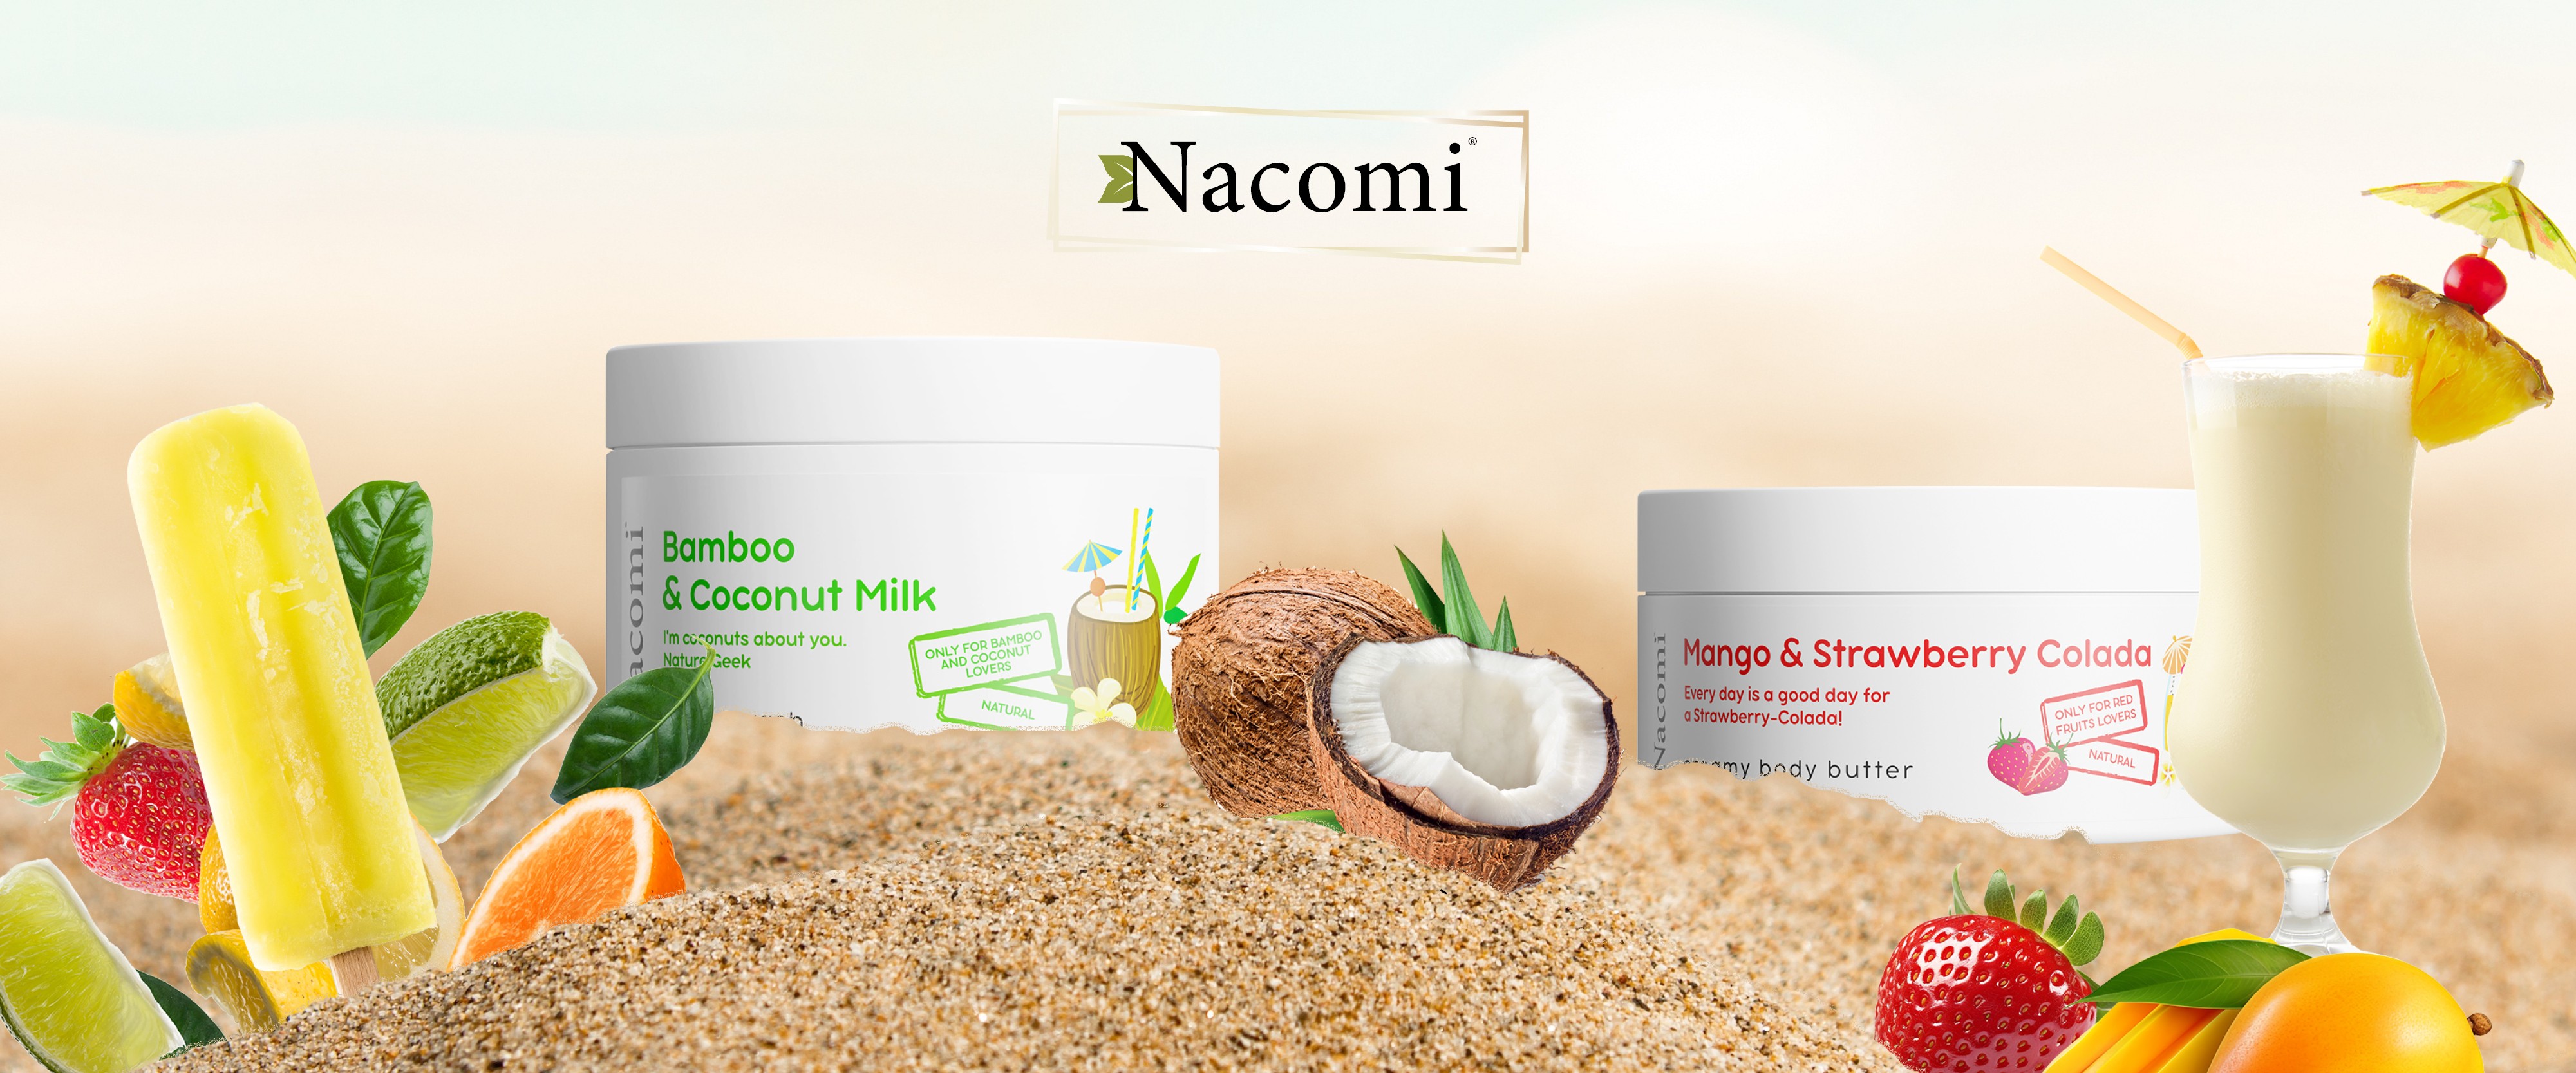 Nacomi, natural cosmetics